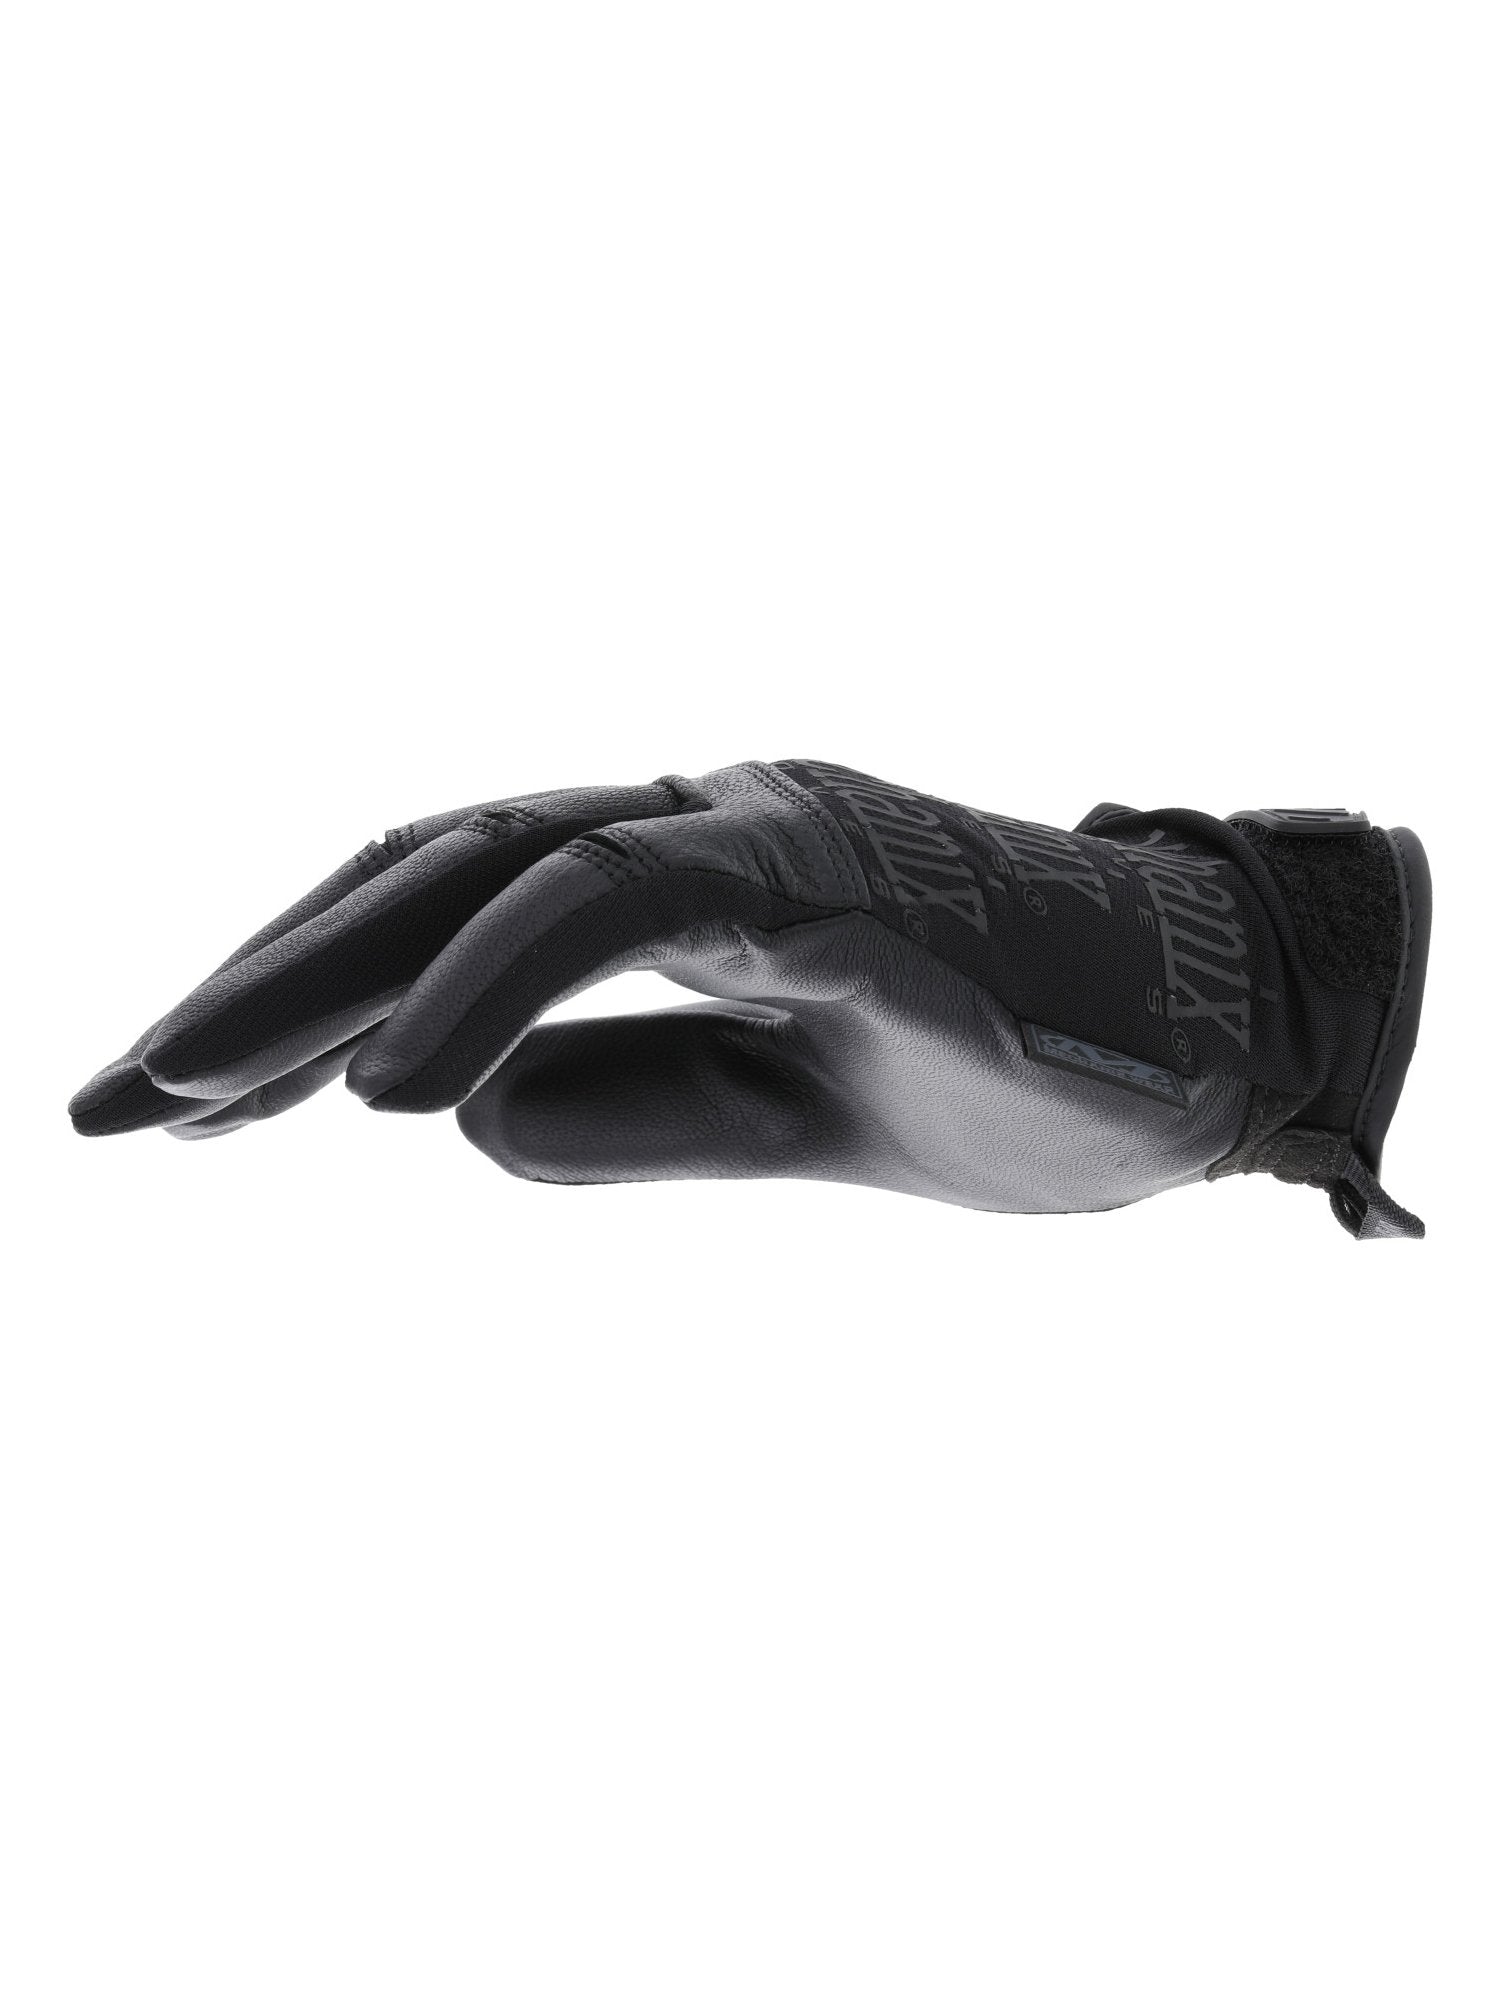 Mechanix Wear High Dexterity Recon Glove - TacSource